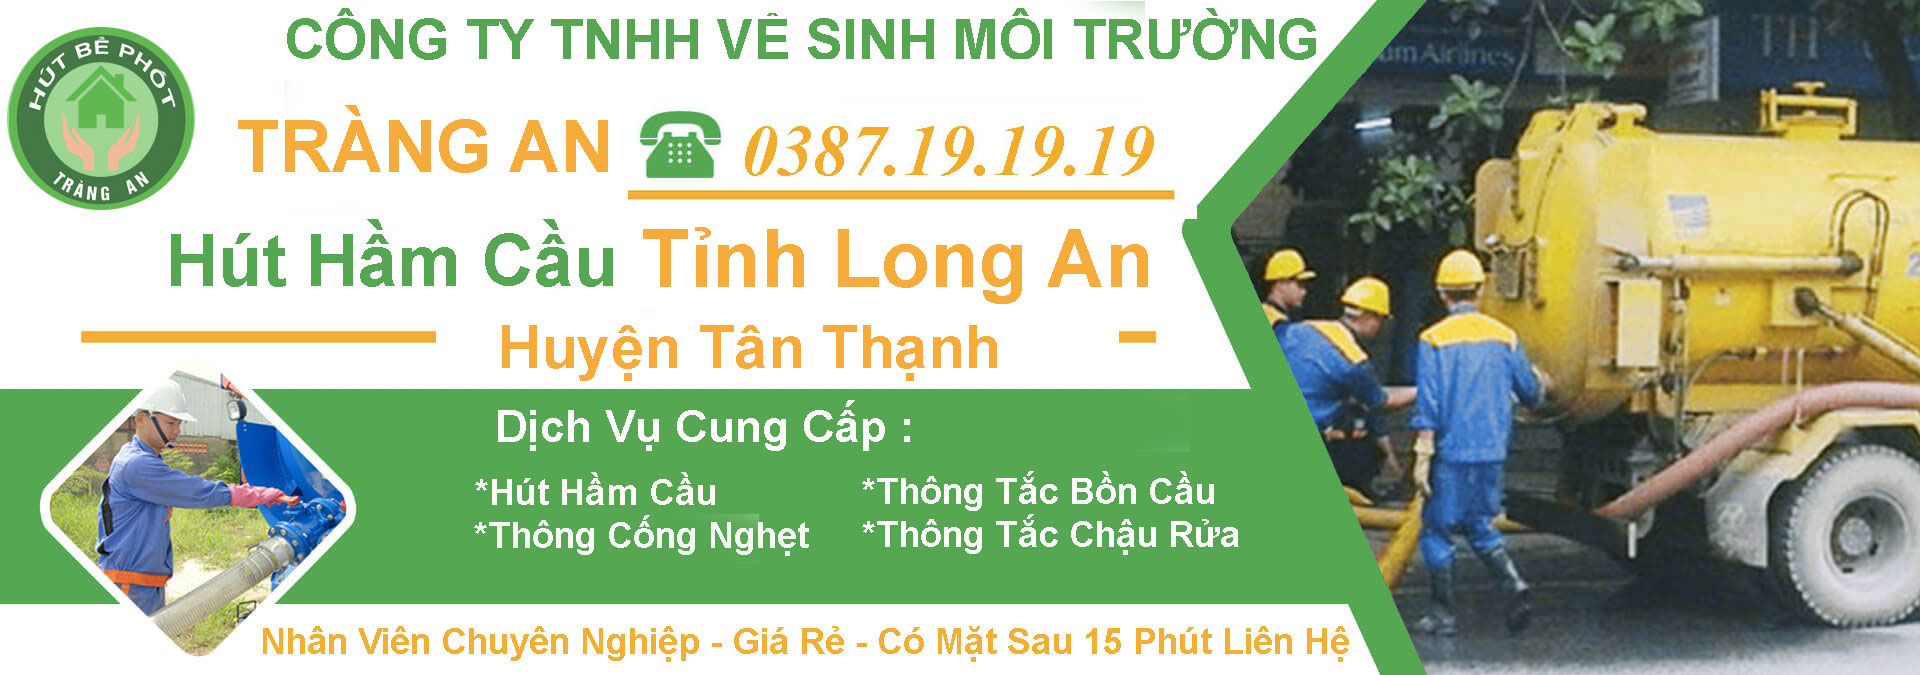 Hut Ham Cau Long An Huyen Tan Thanh